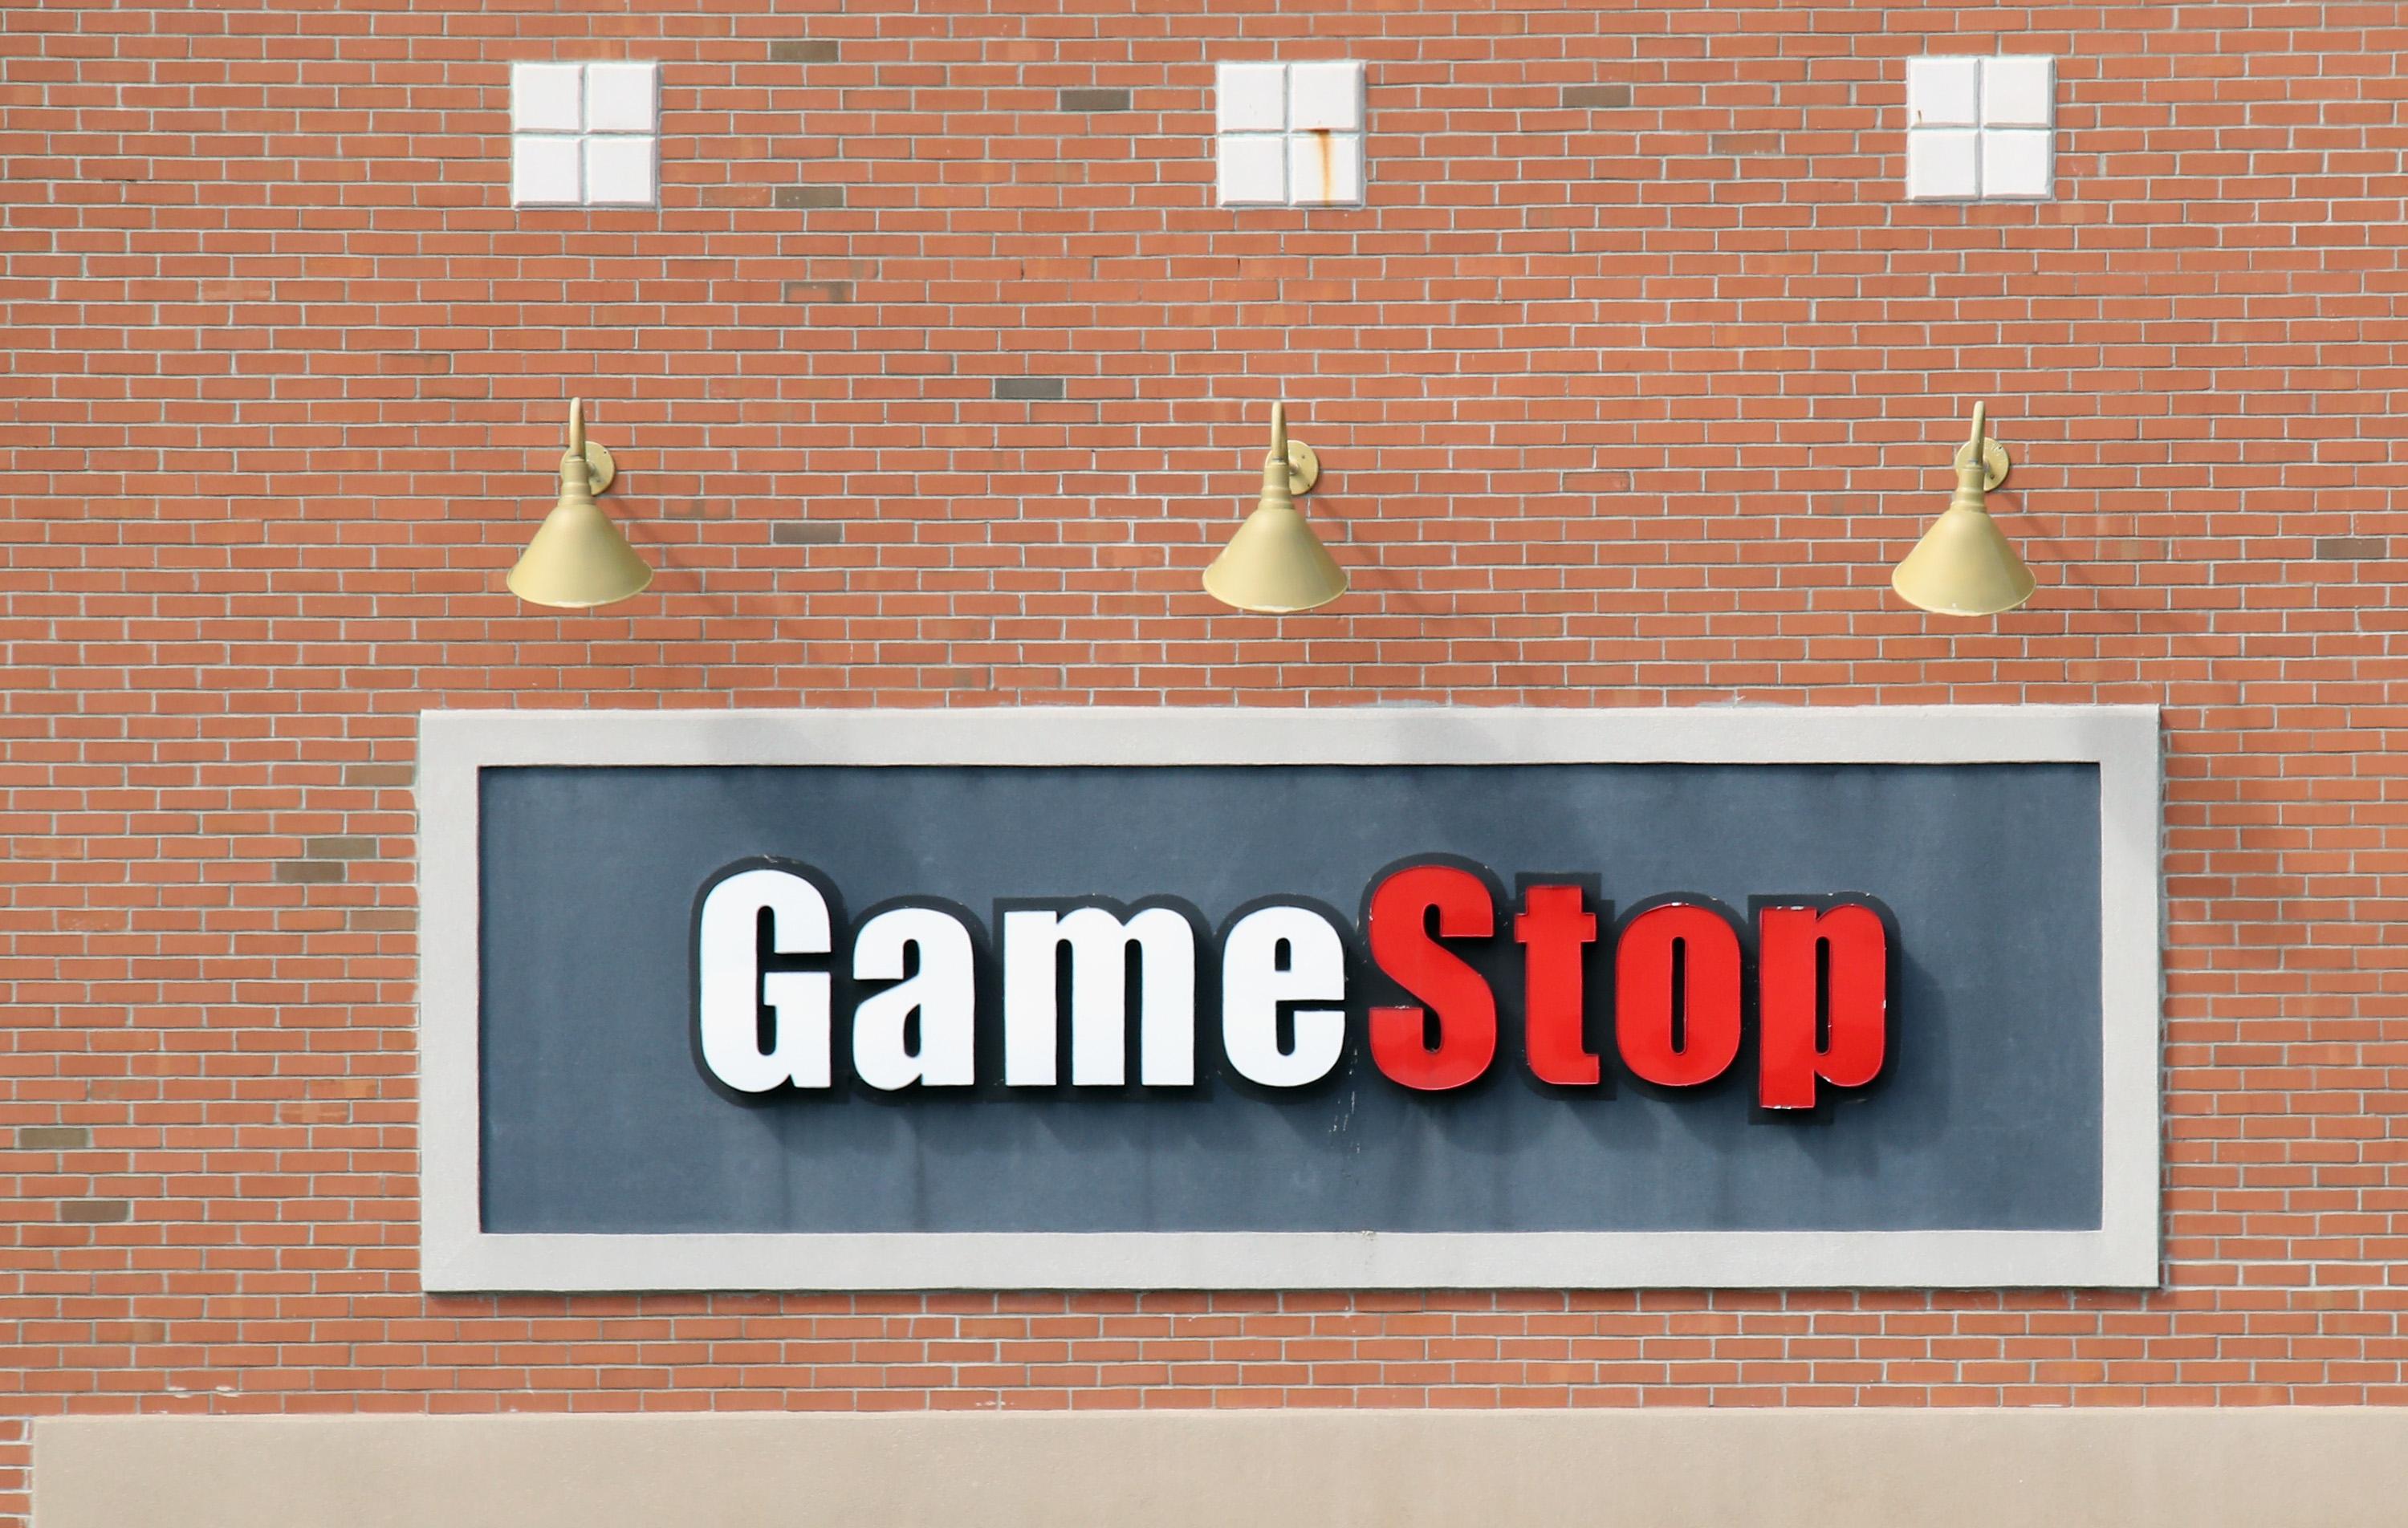 GameStop building sign